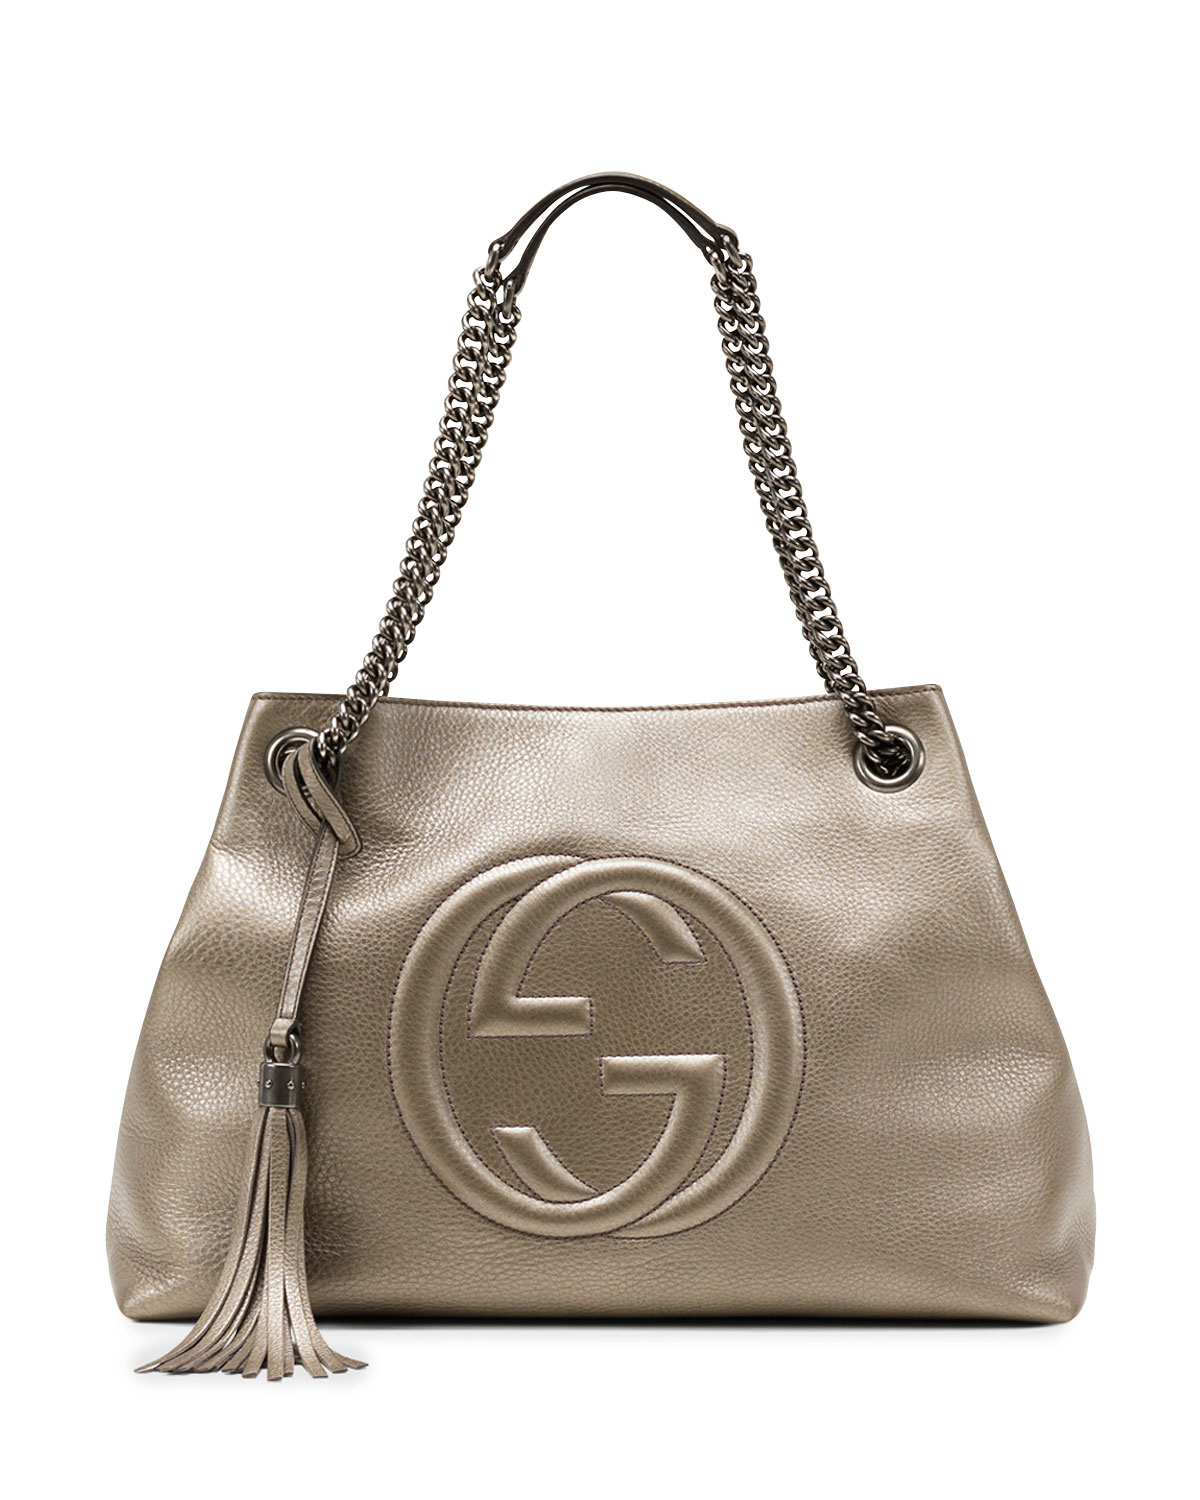 Lyst - Gucci Soho Metallic Leather Shoulder Bag in Natural